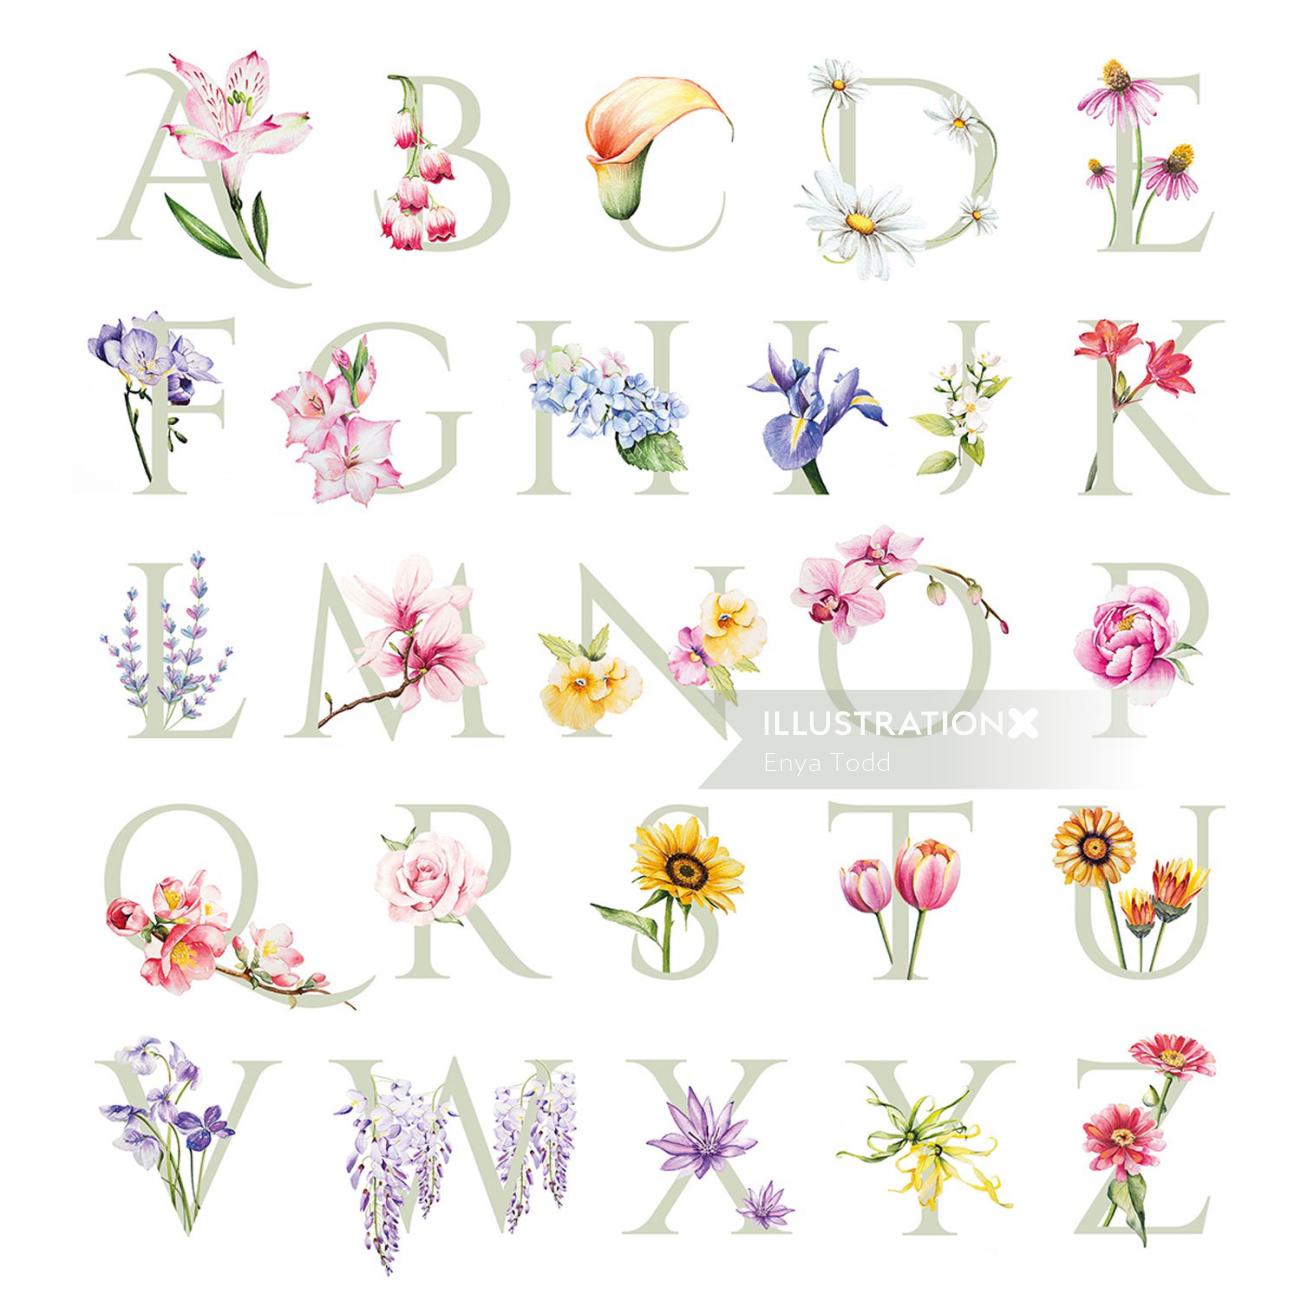 Lettering illustration of flower alphabets